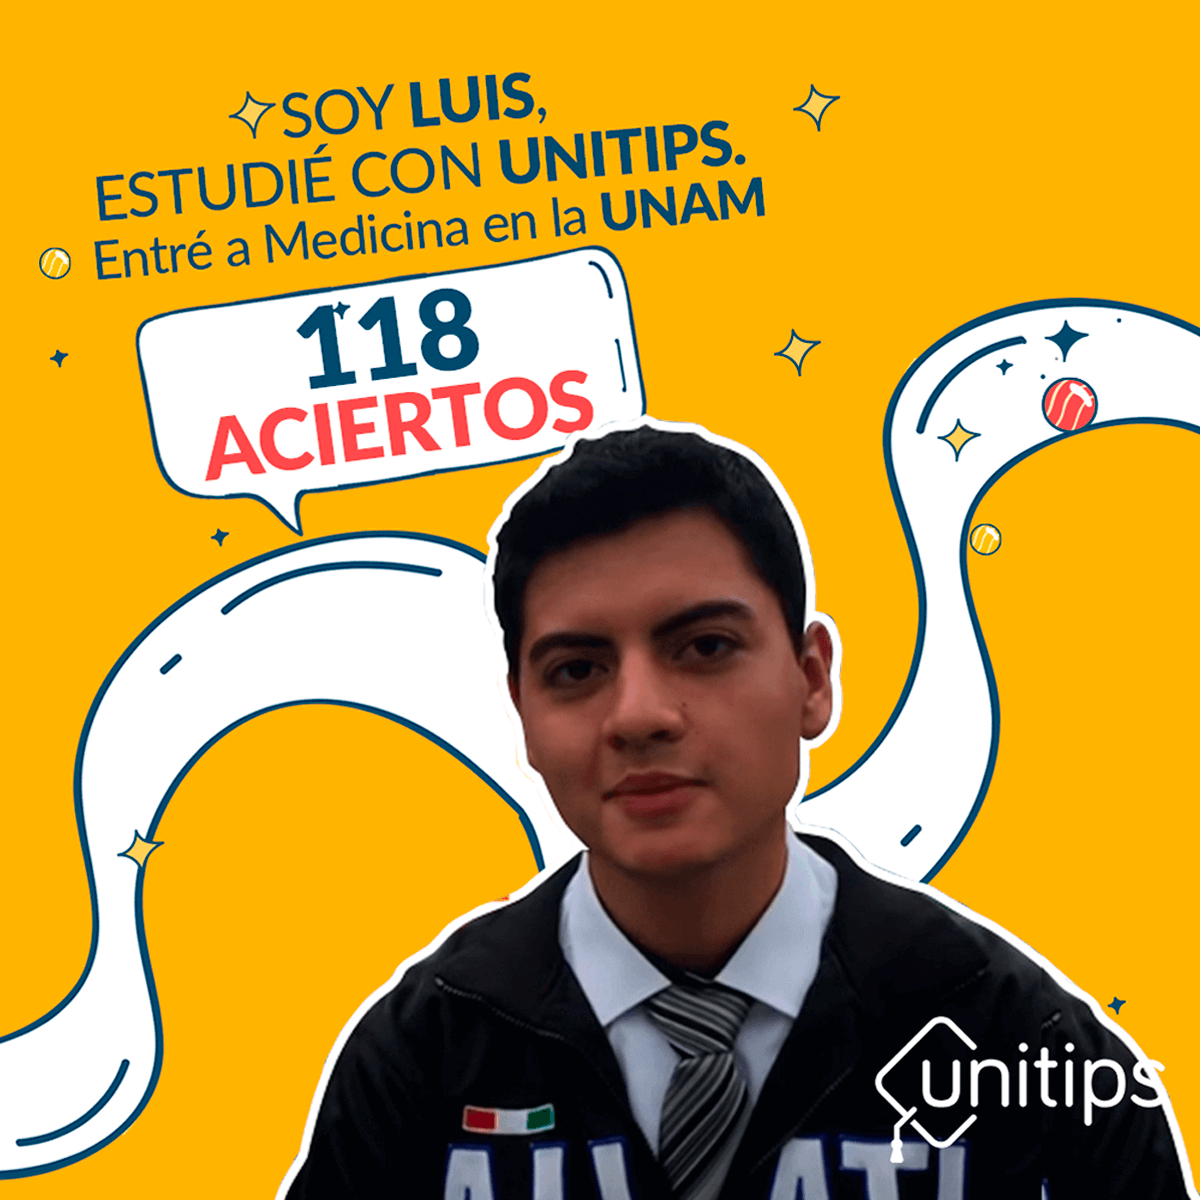 Testimonio del curso UNAM de Unitips